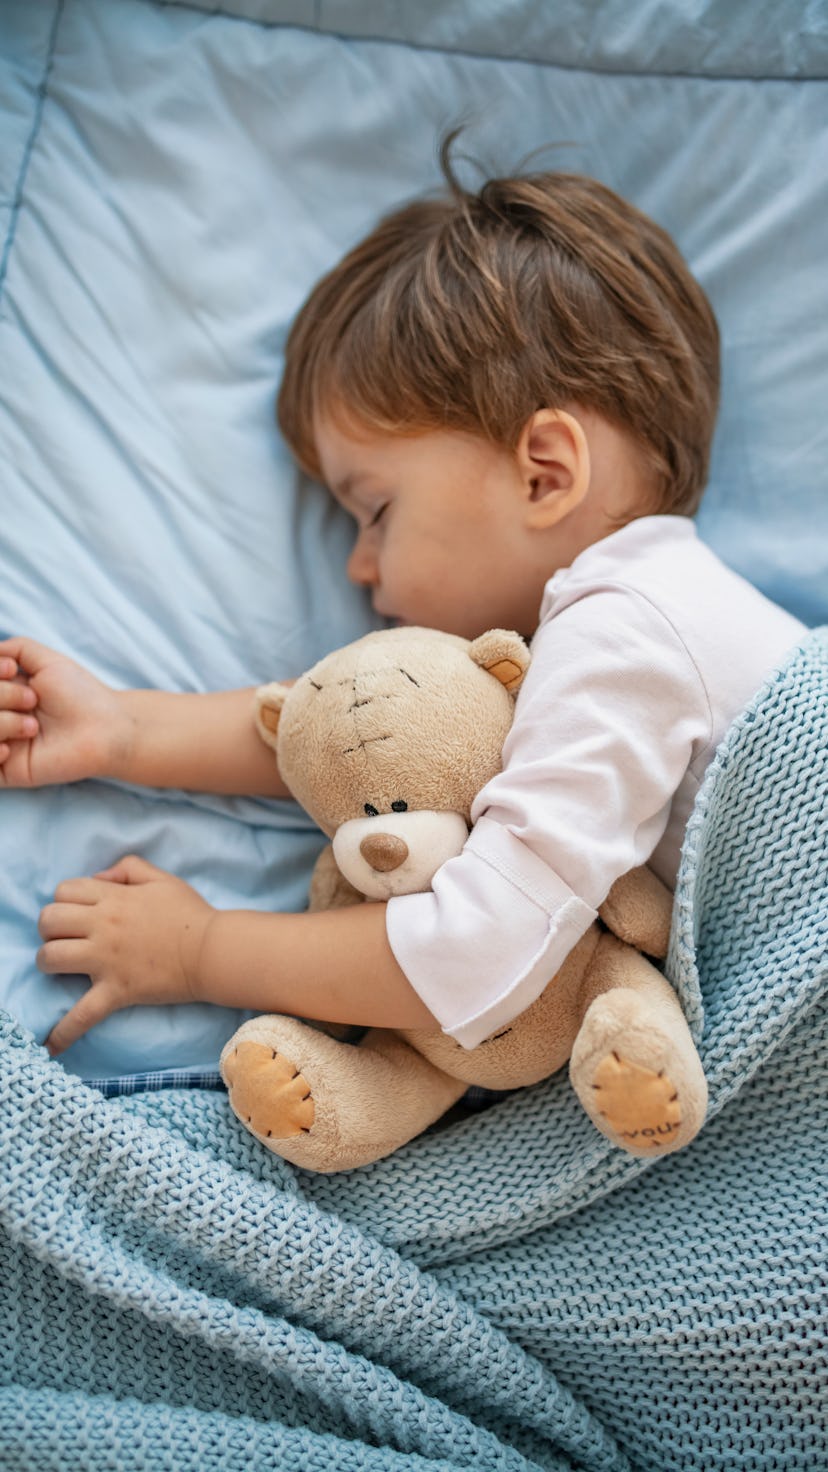 Toddler sleeping under blanket with stuffed animal.